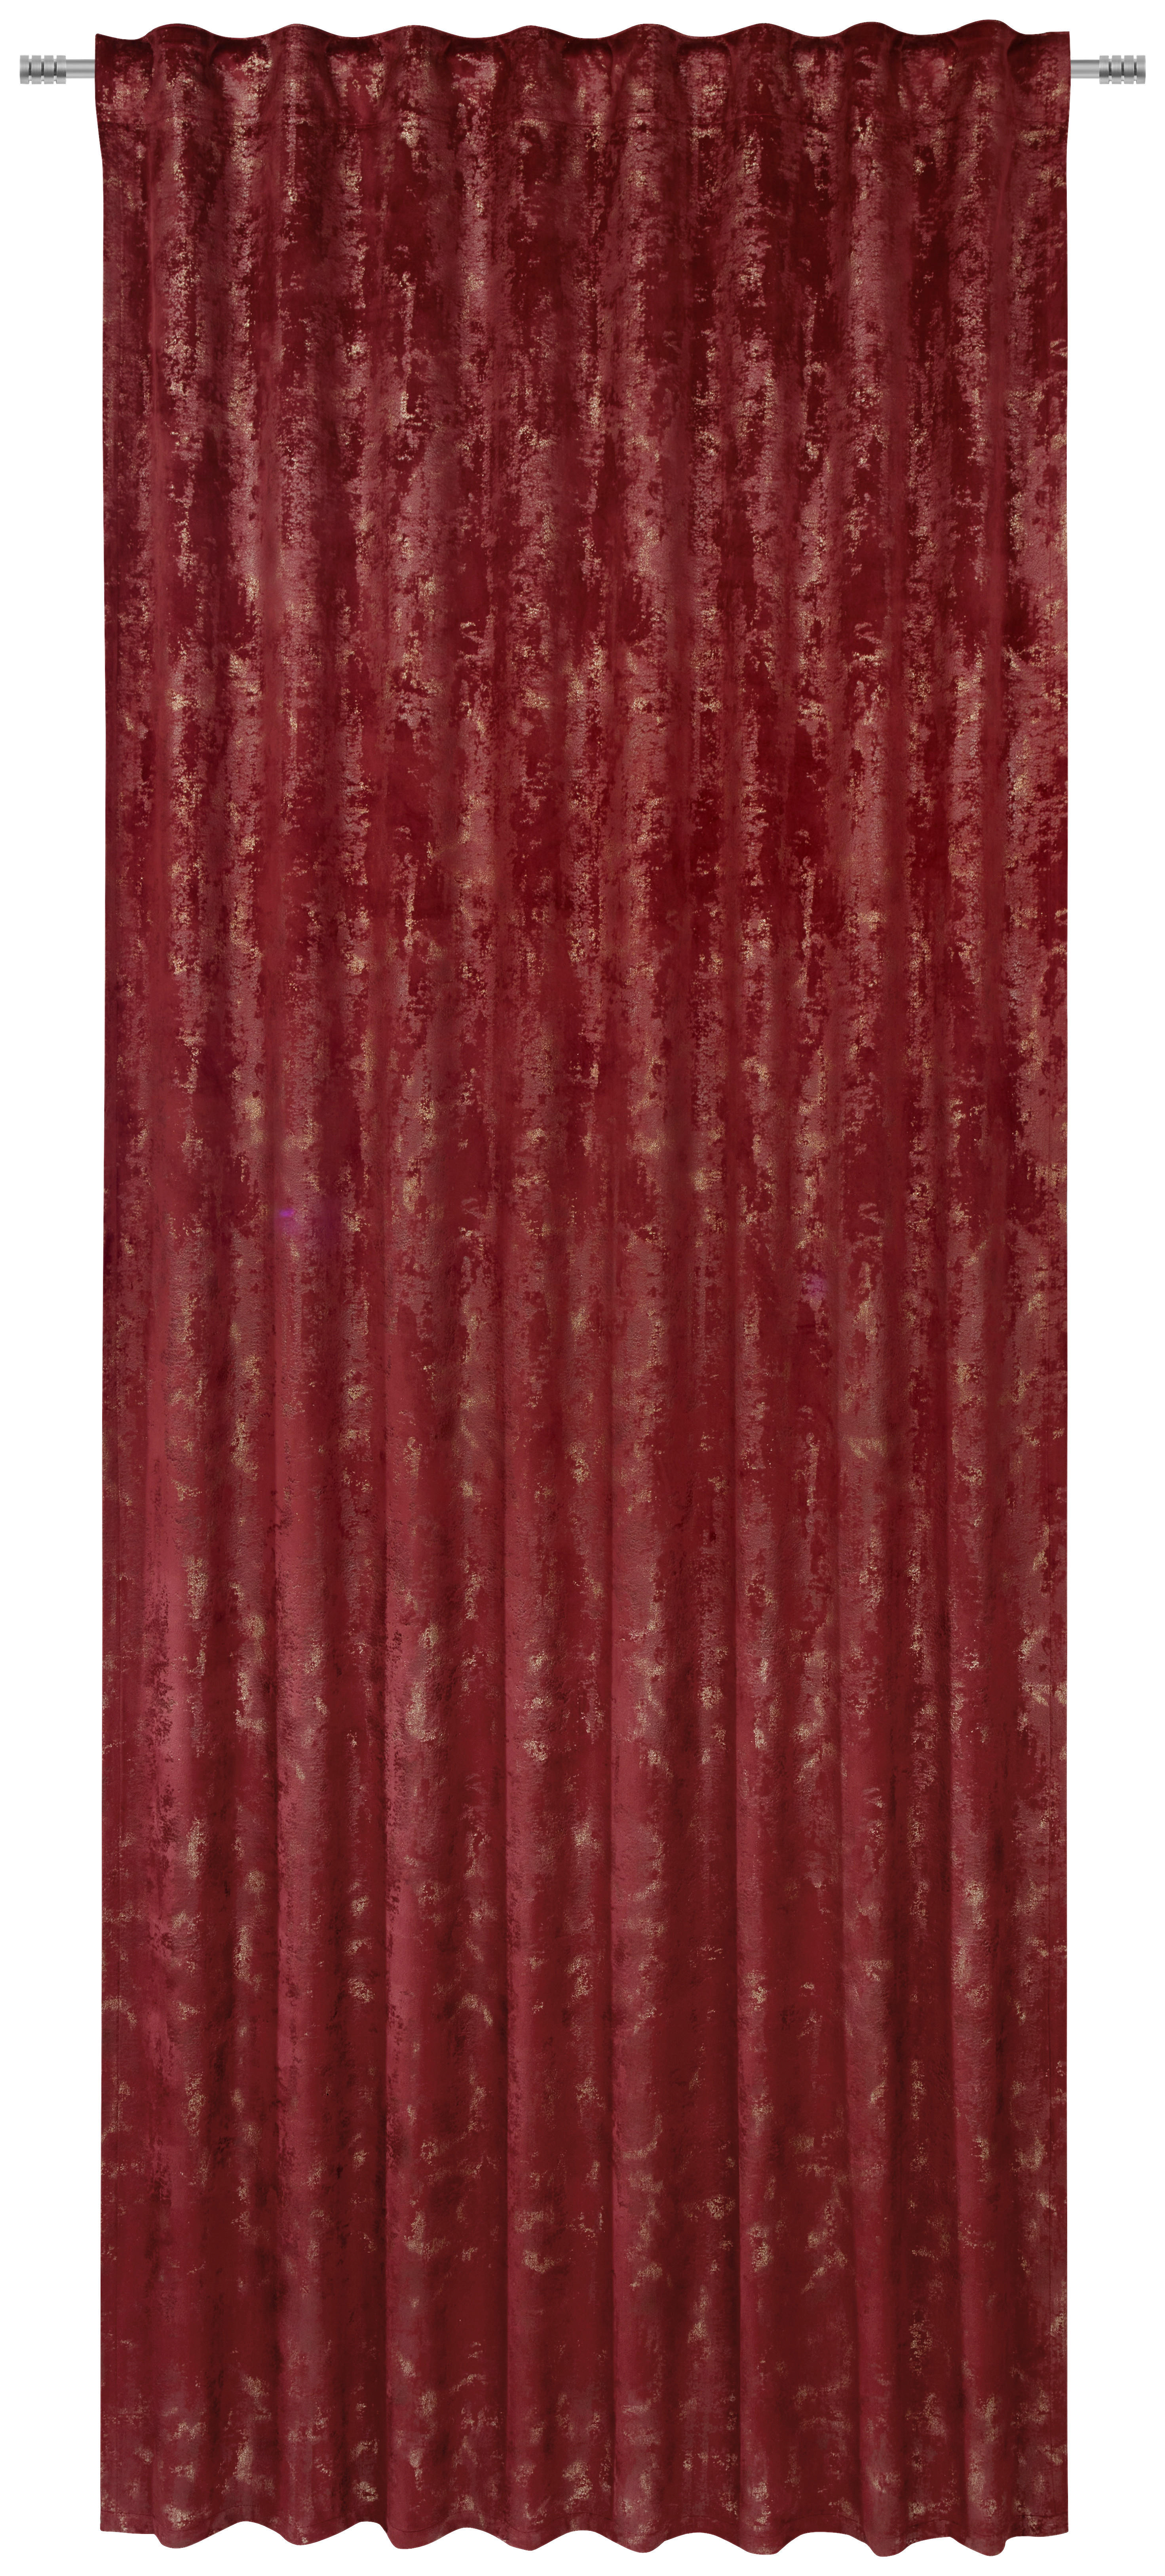 FERTIGVORHANG Golden-Shabby blickdicht 130/250 cm   - Rot/Goldfarben, Basics, Textil (130/250cm) - Ambiente